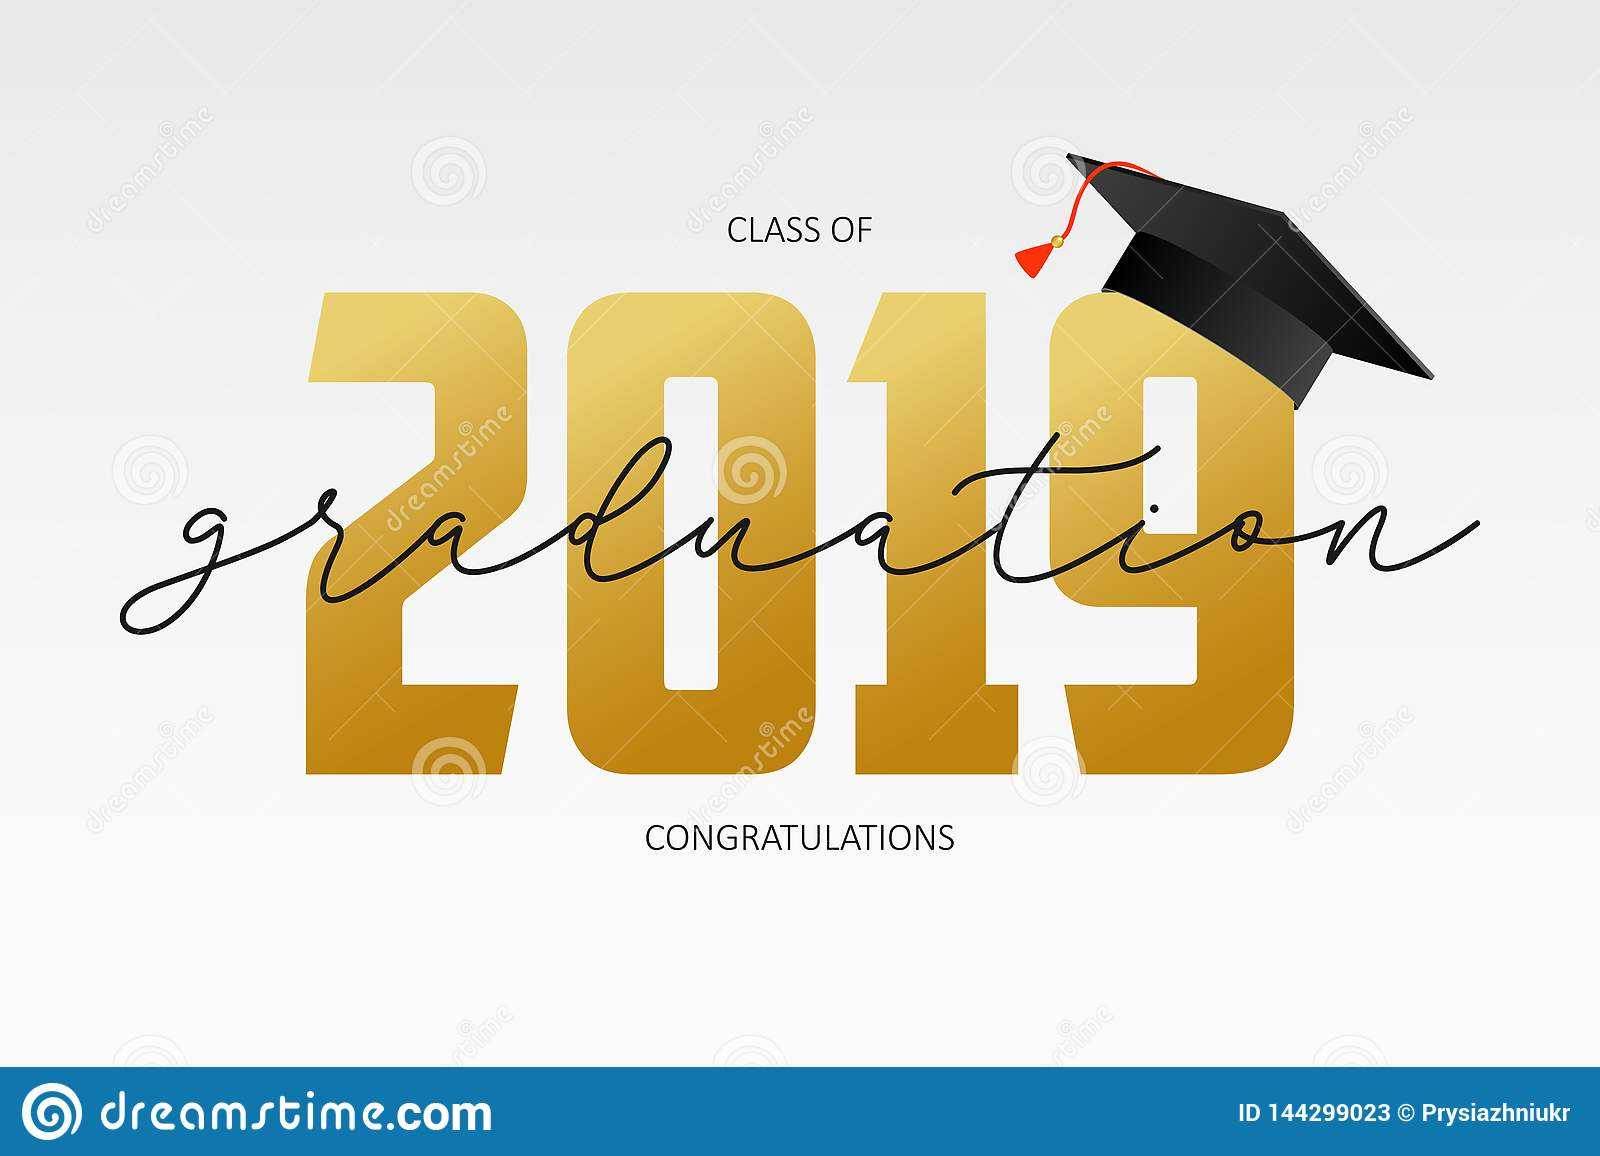 Graduating Card Template. Class Of 2019 – Banner With Gold Regarding Congratulations Banner Template